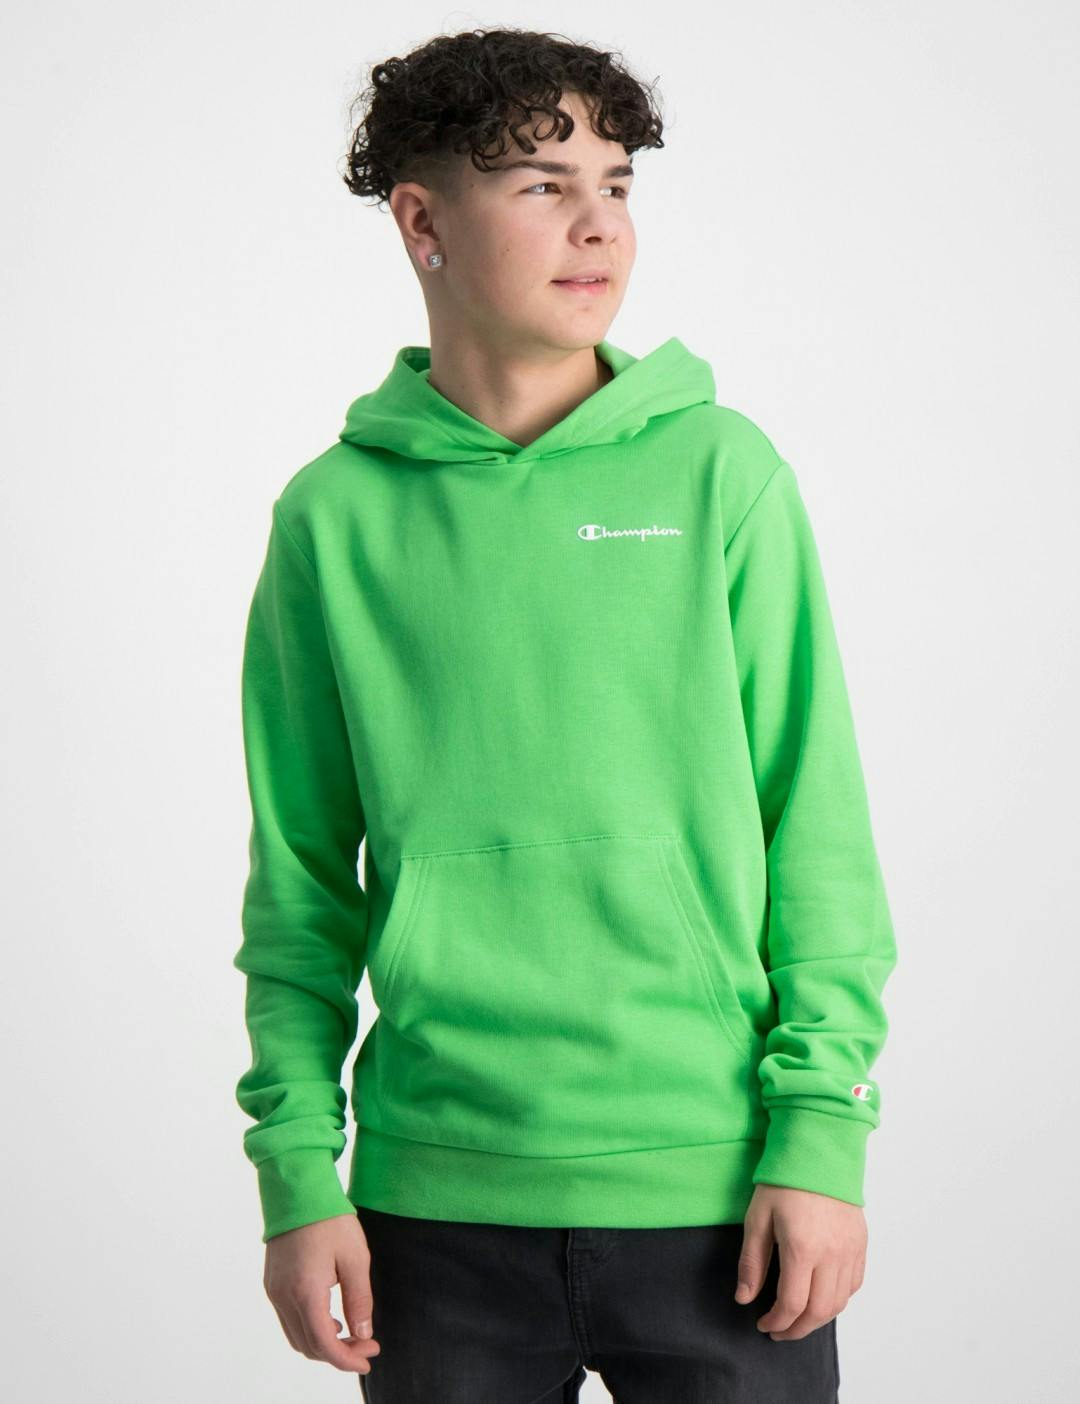 spektrum Fryse Ideelt Grøn Hooded Sweatshirt til Dreng | Kids Brand Store